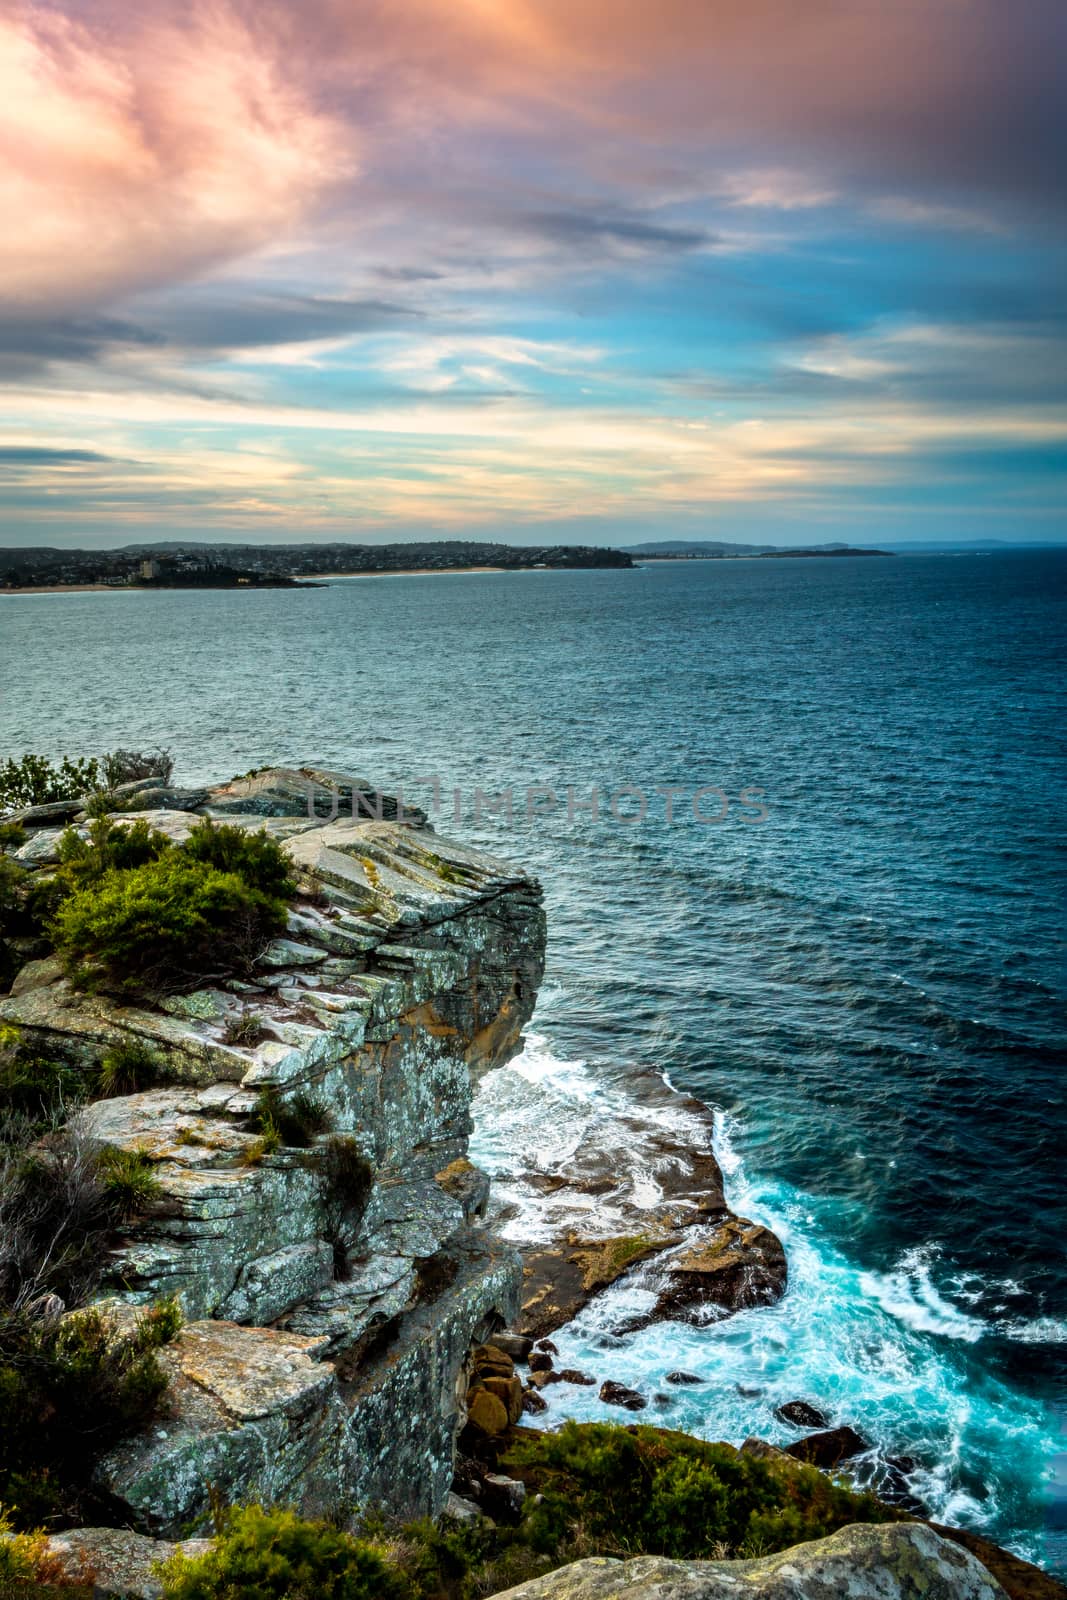 Scenic views over the coastline of Manly Australia